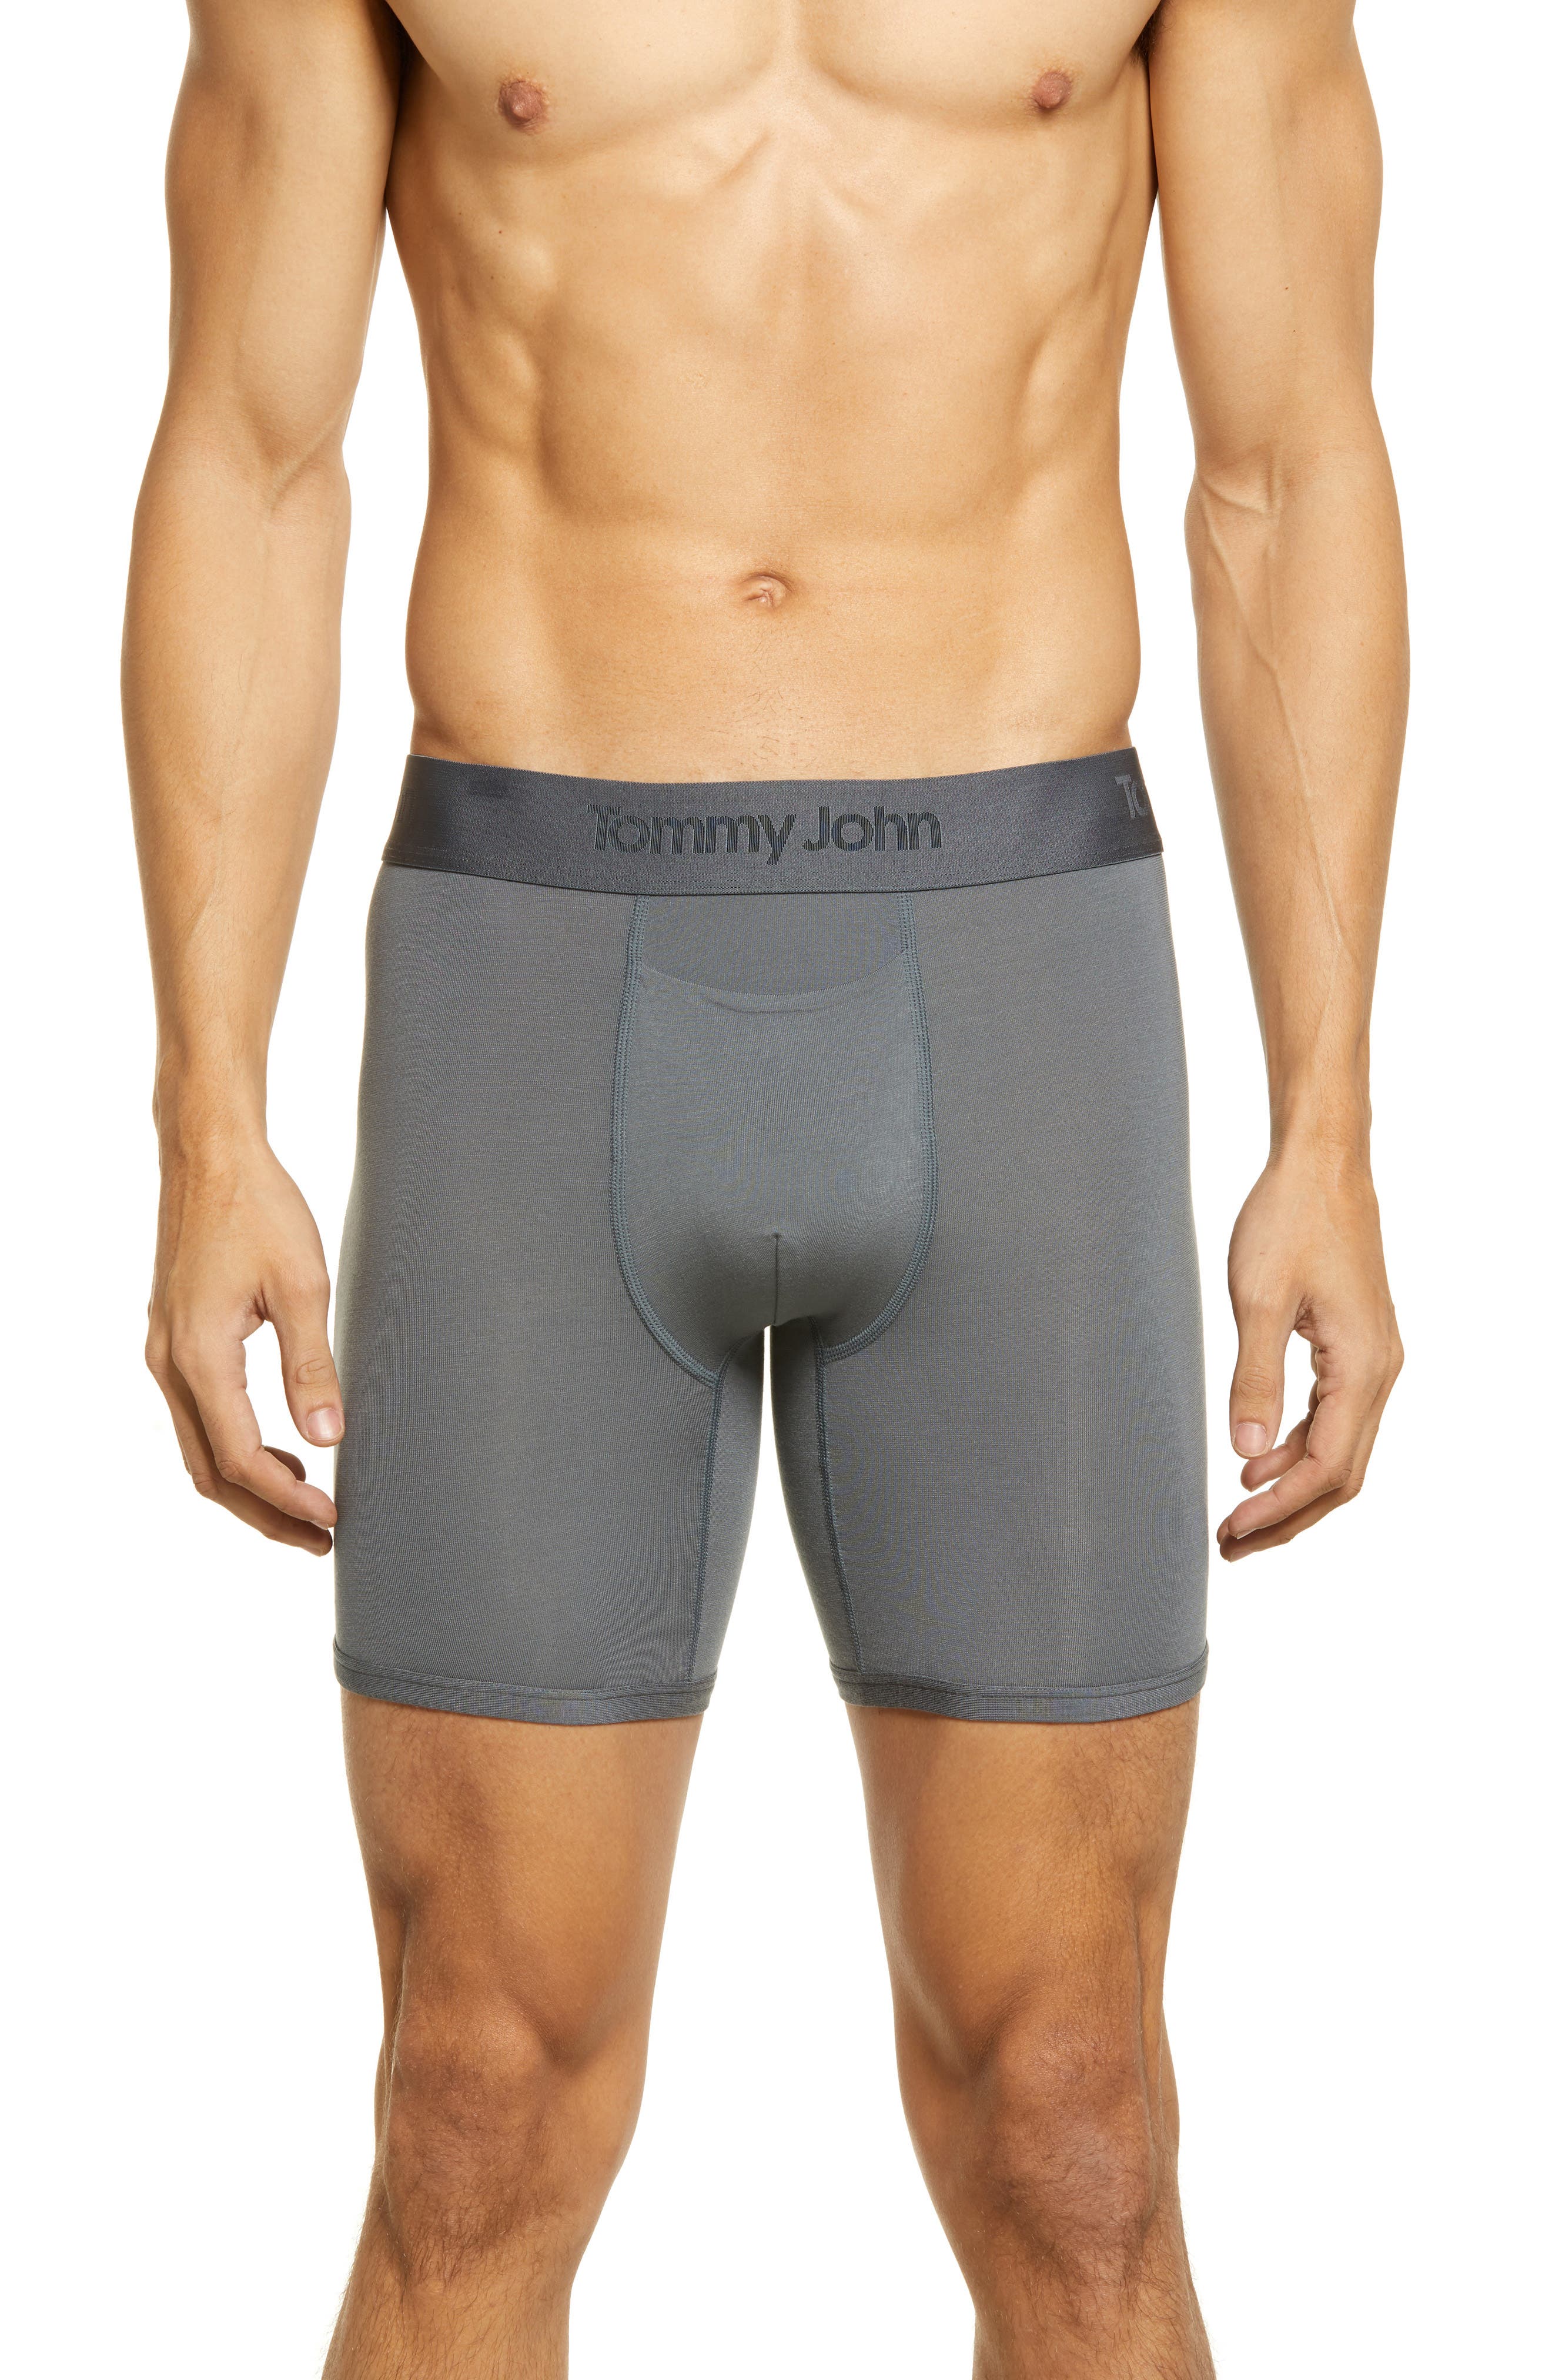 tommy john underwear | Nordstrom